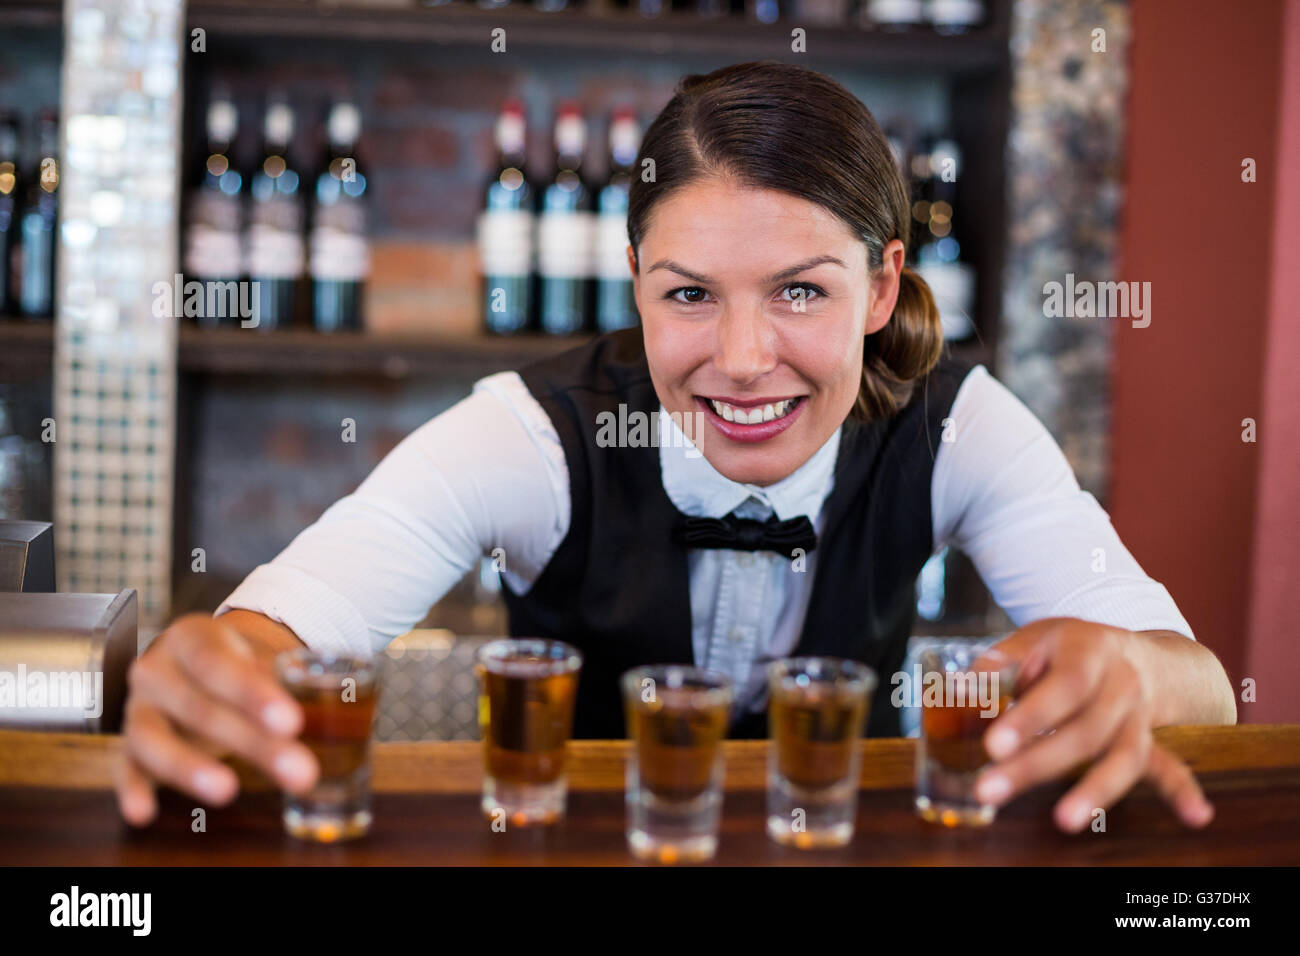 Portrait of bartender placing shot glasses on bar counter Stock Photo